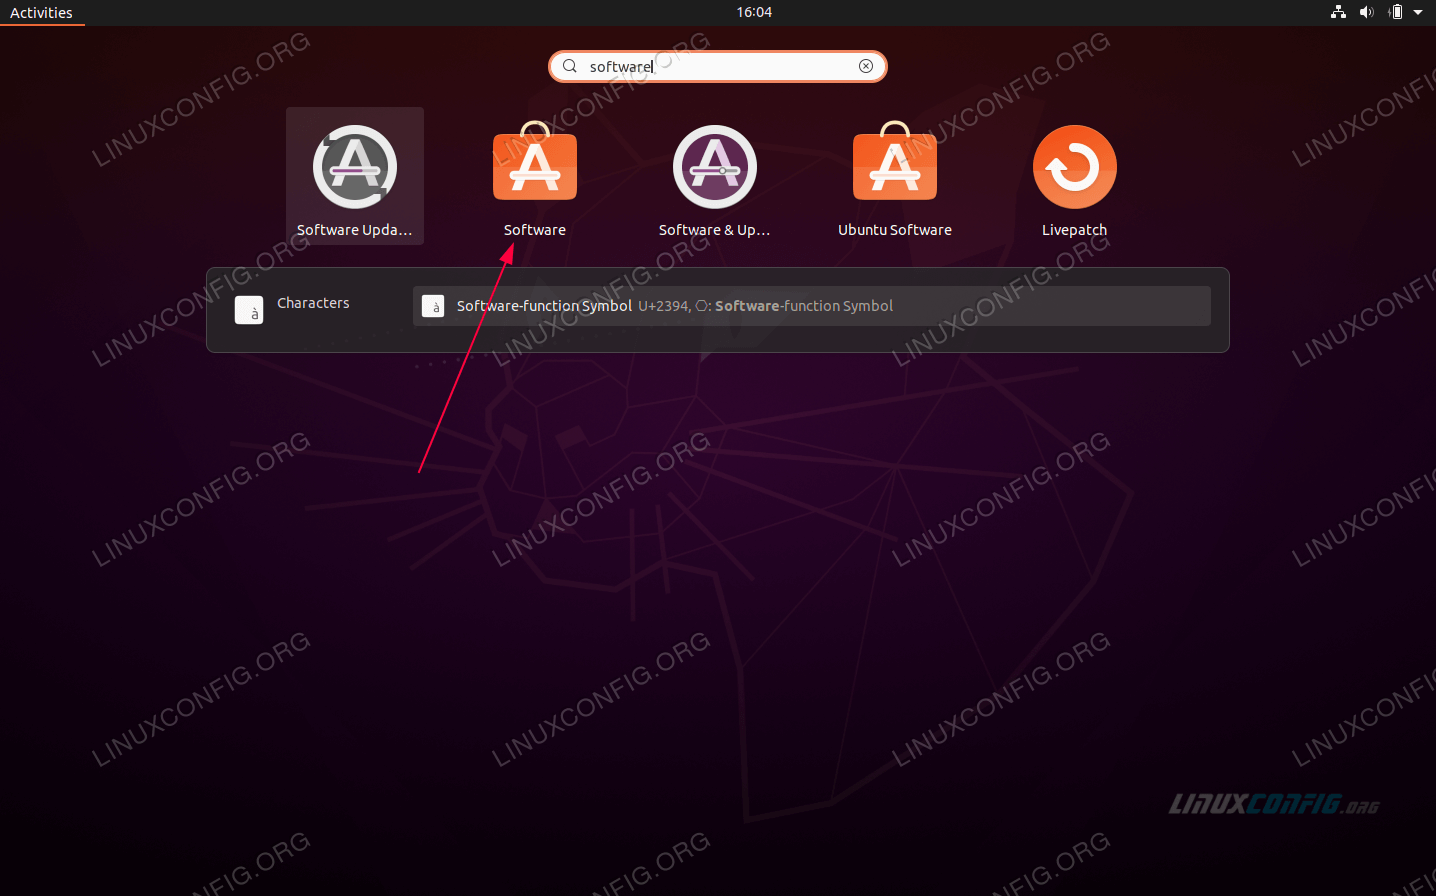 01-how-to-install-pycharm-on-ubuntu-20-04-focal-fossa-linux-desktop